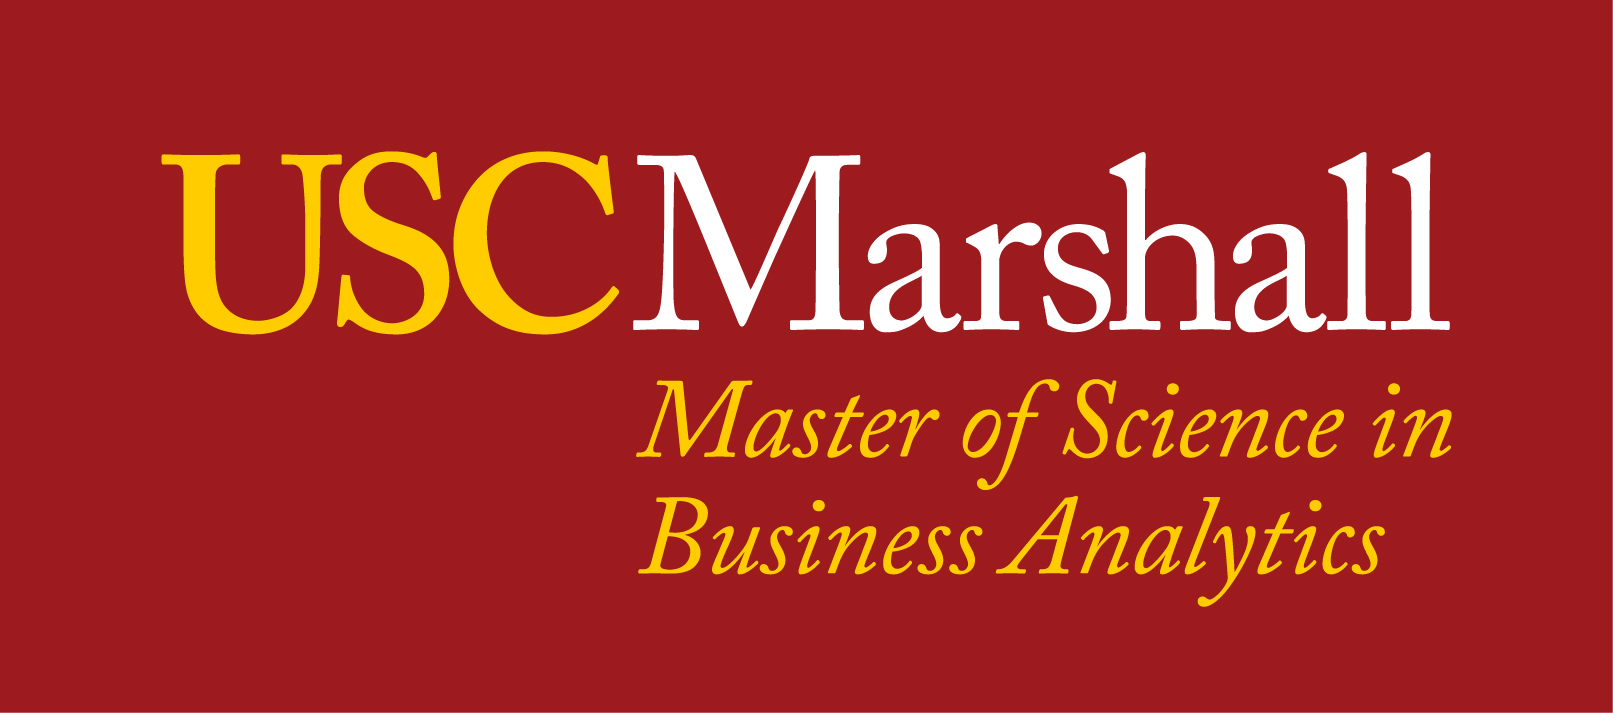 USC Marshall School of Business